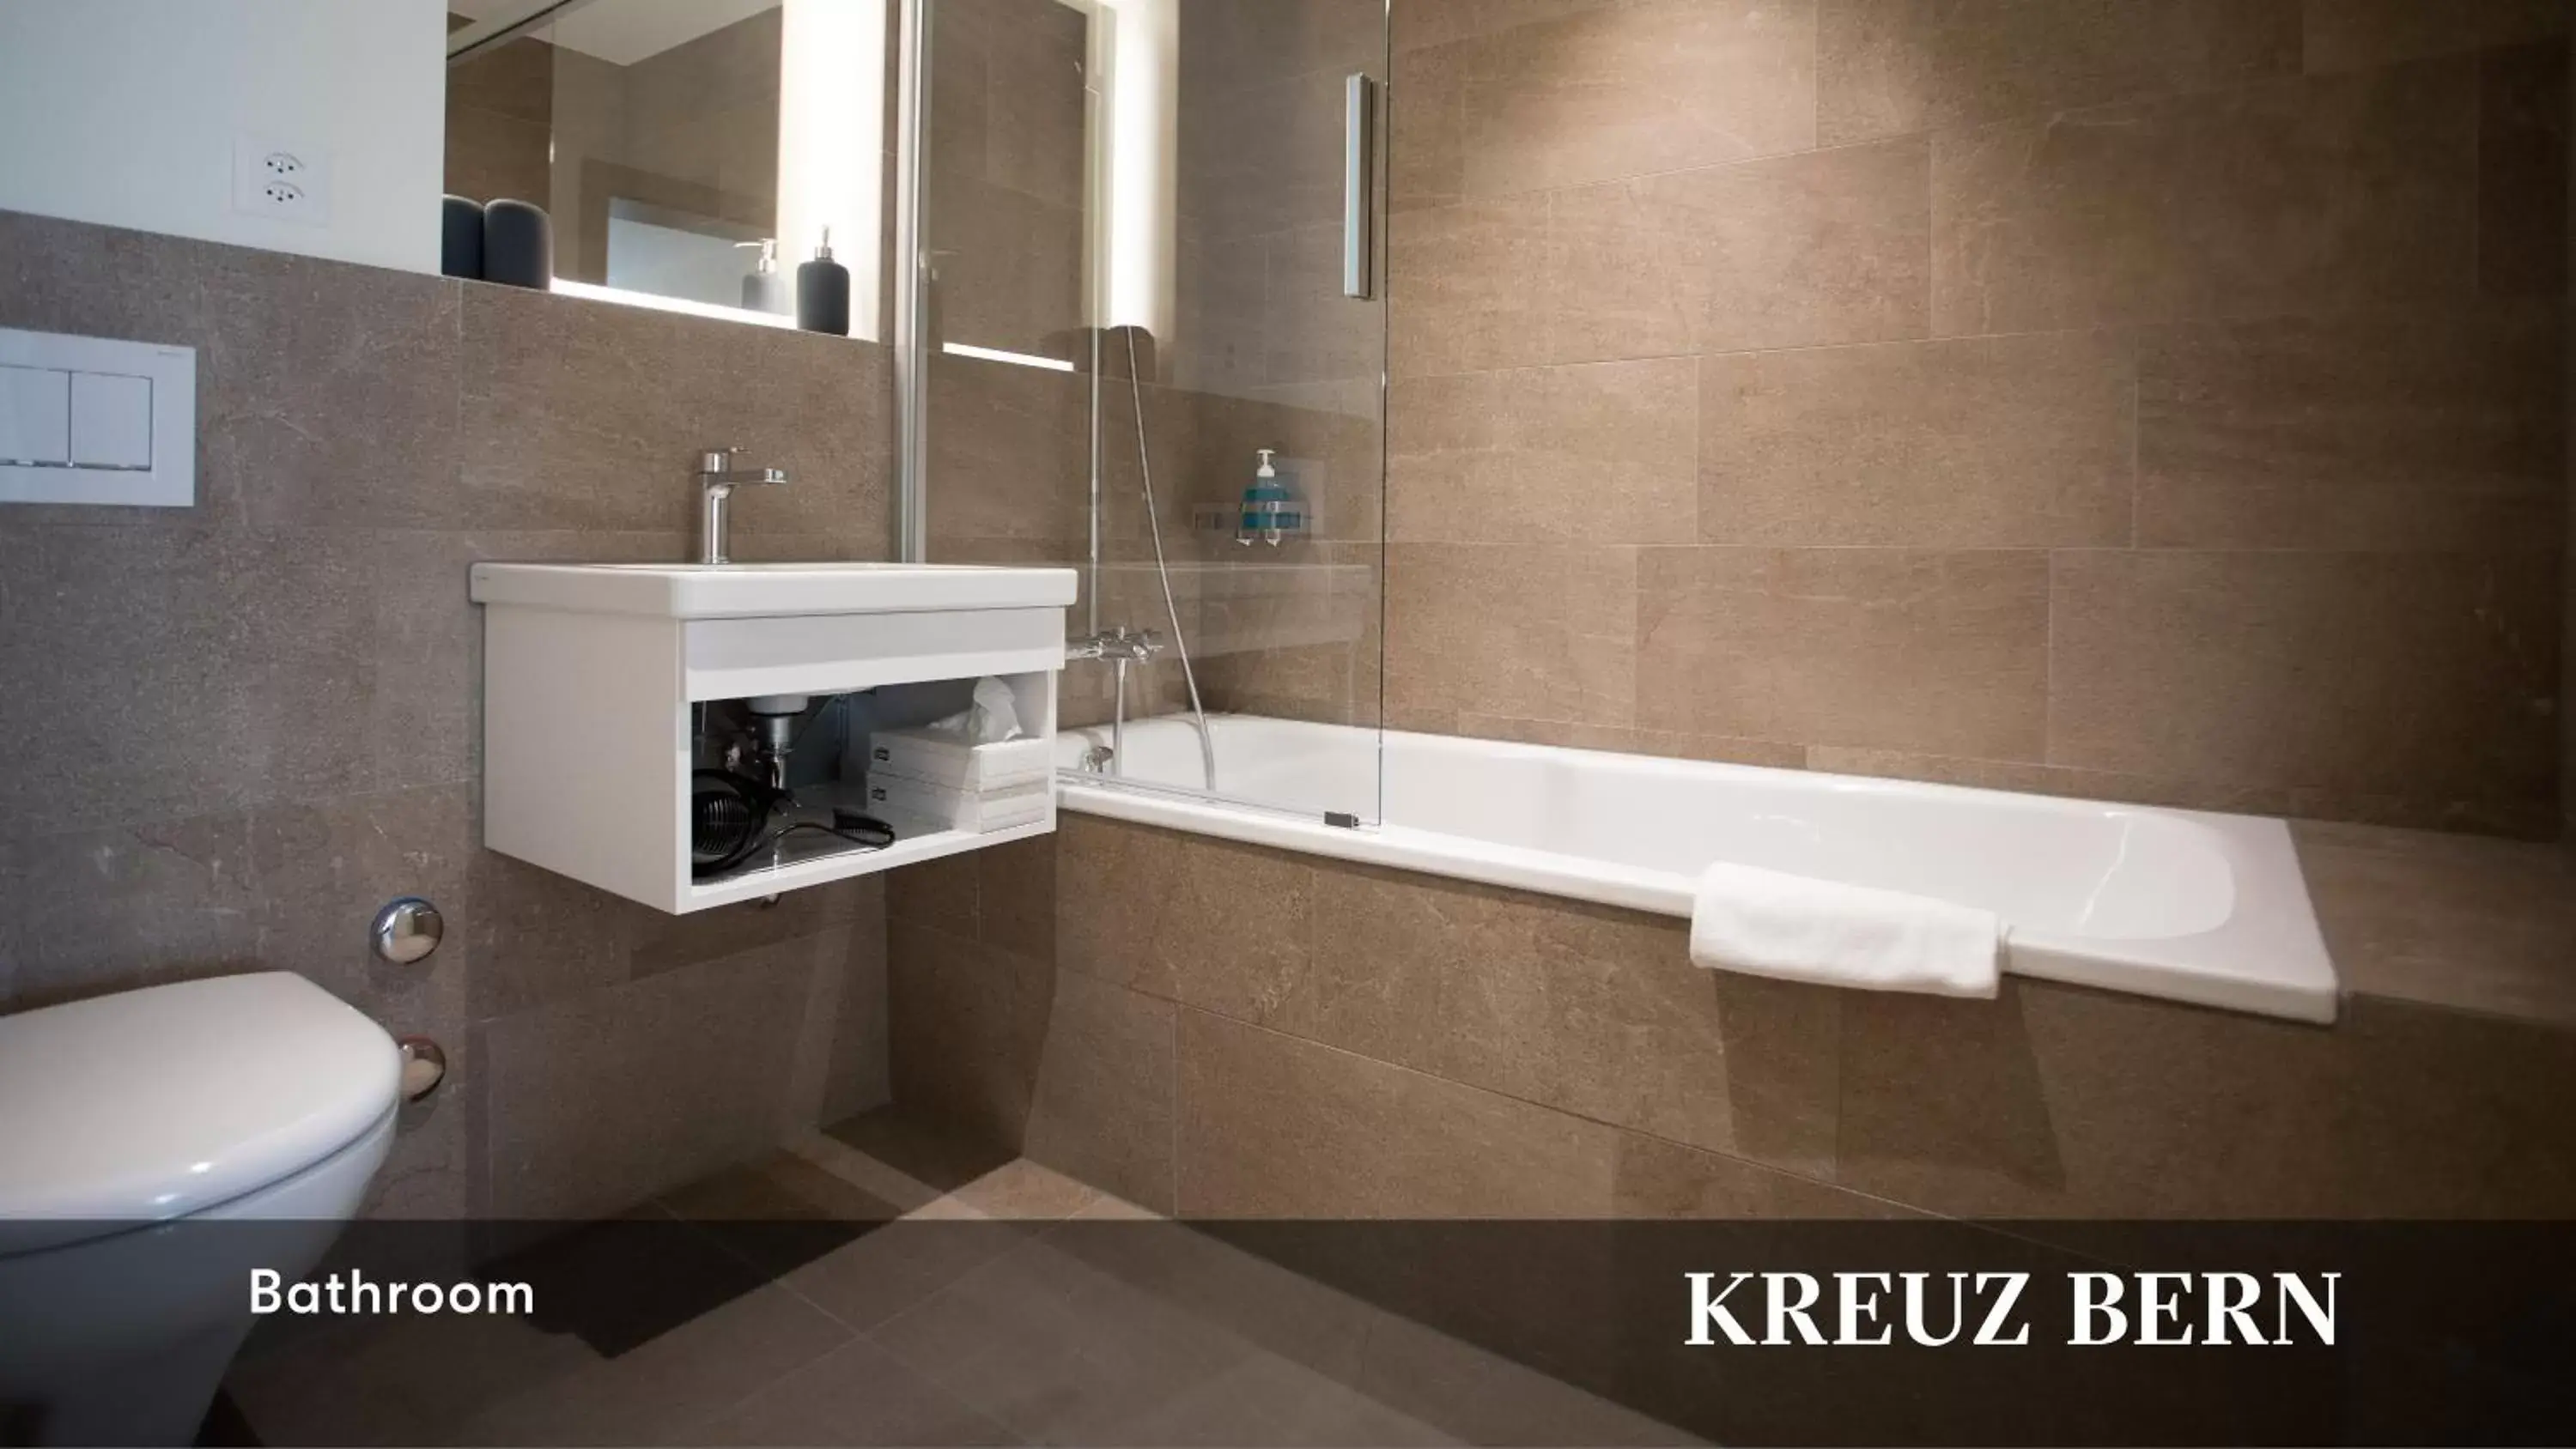 Bathroom in Kreuz Bern Modern City Hotel